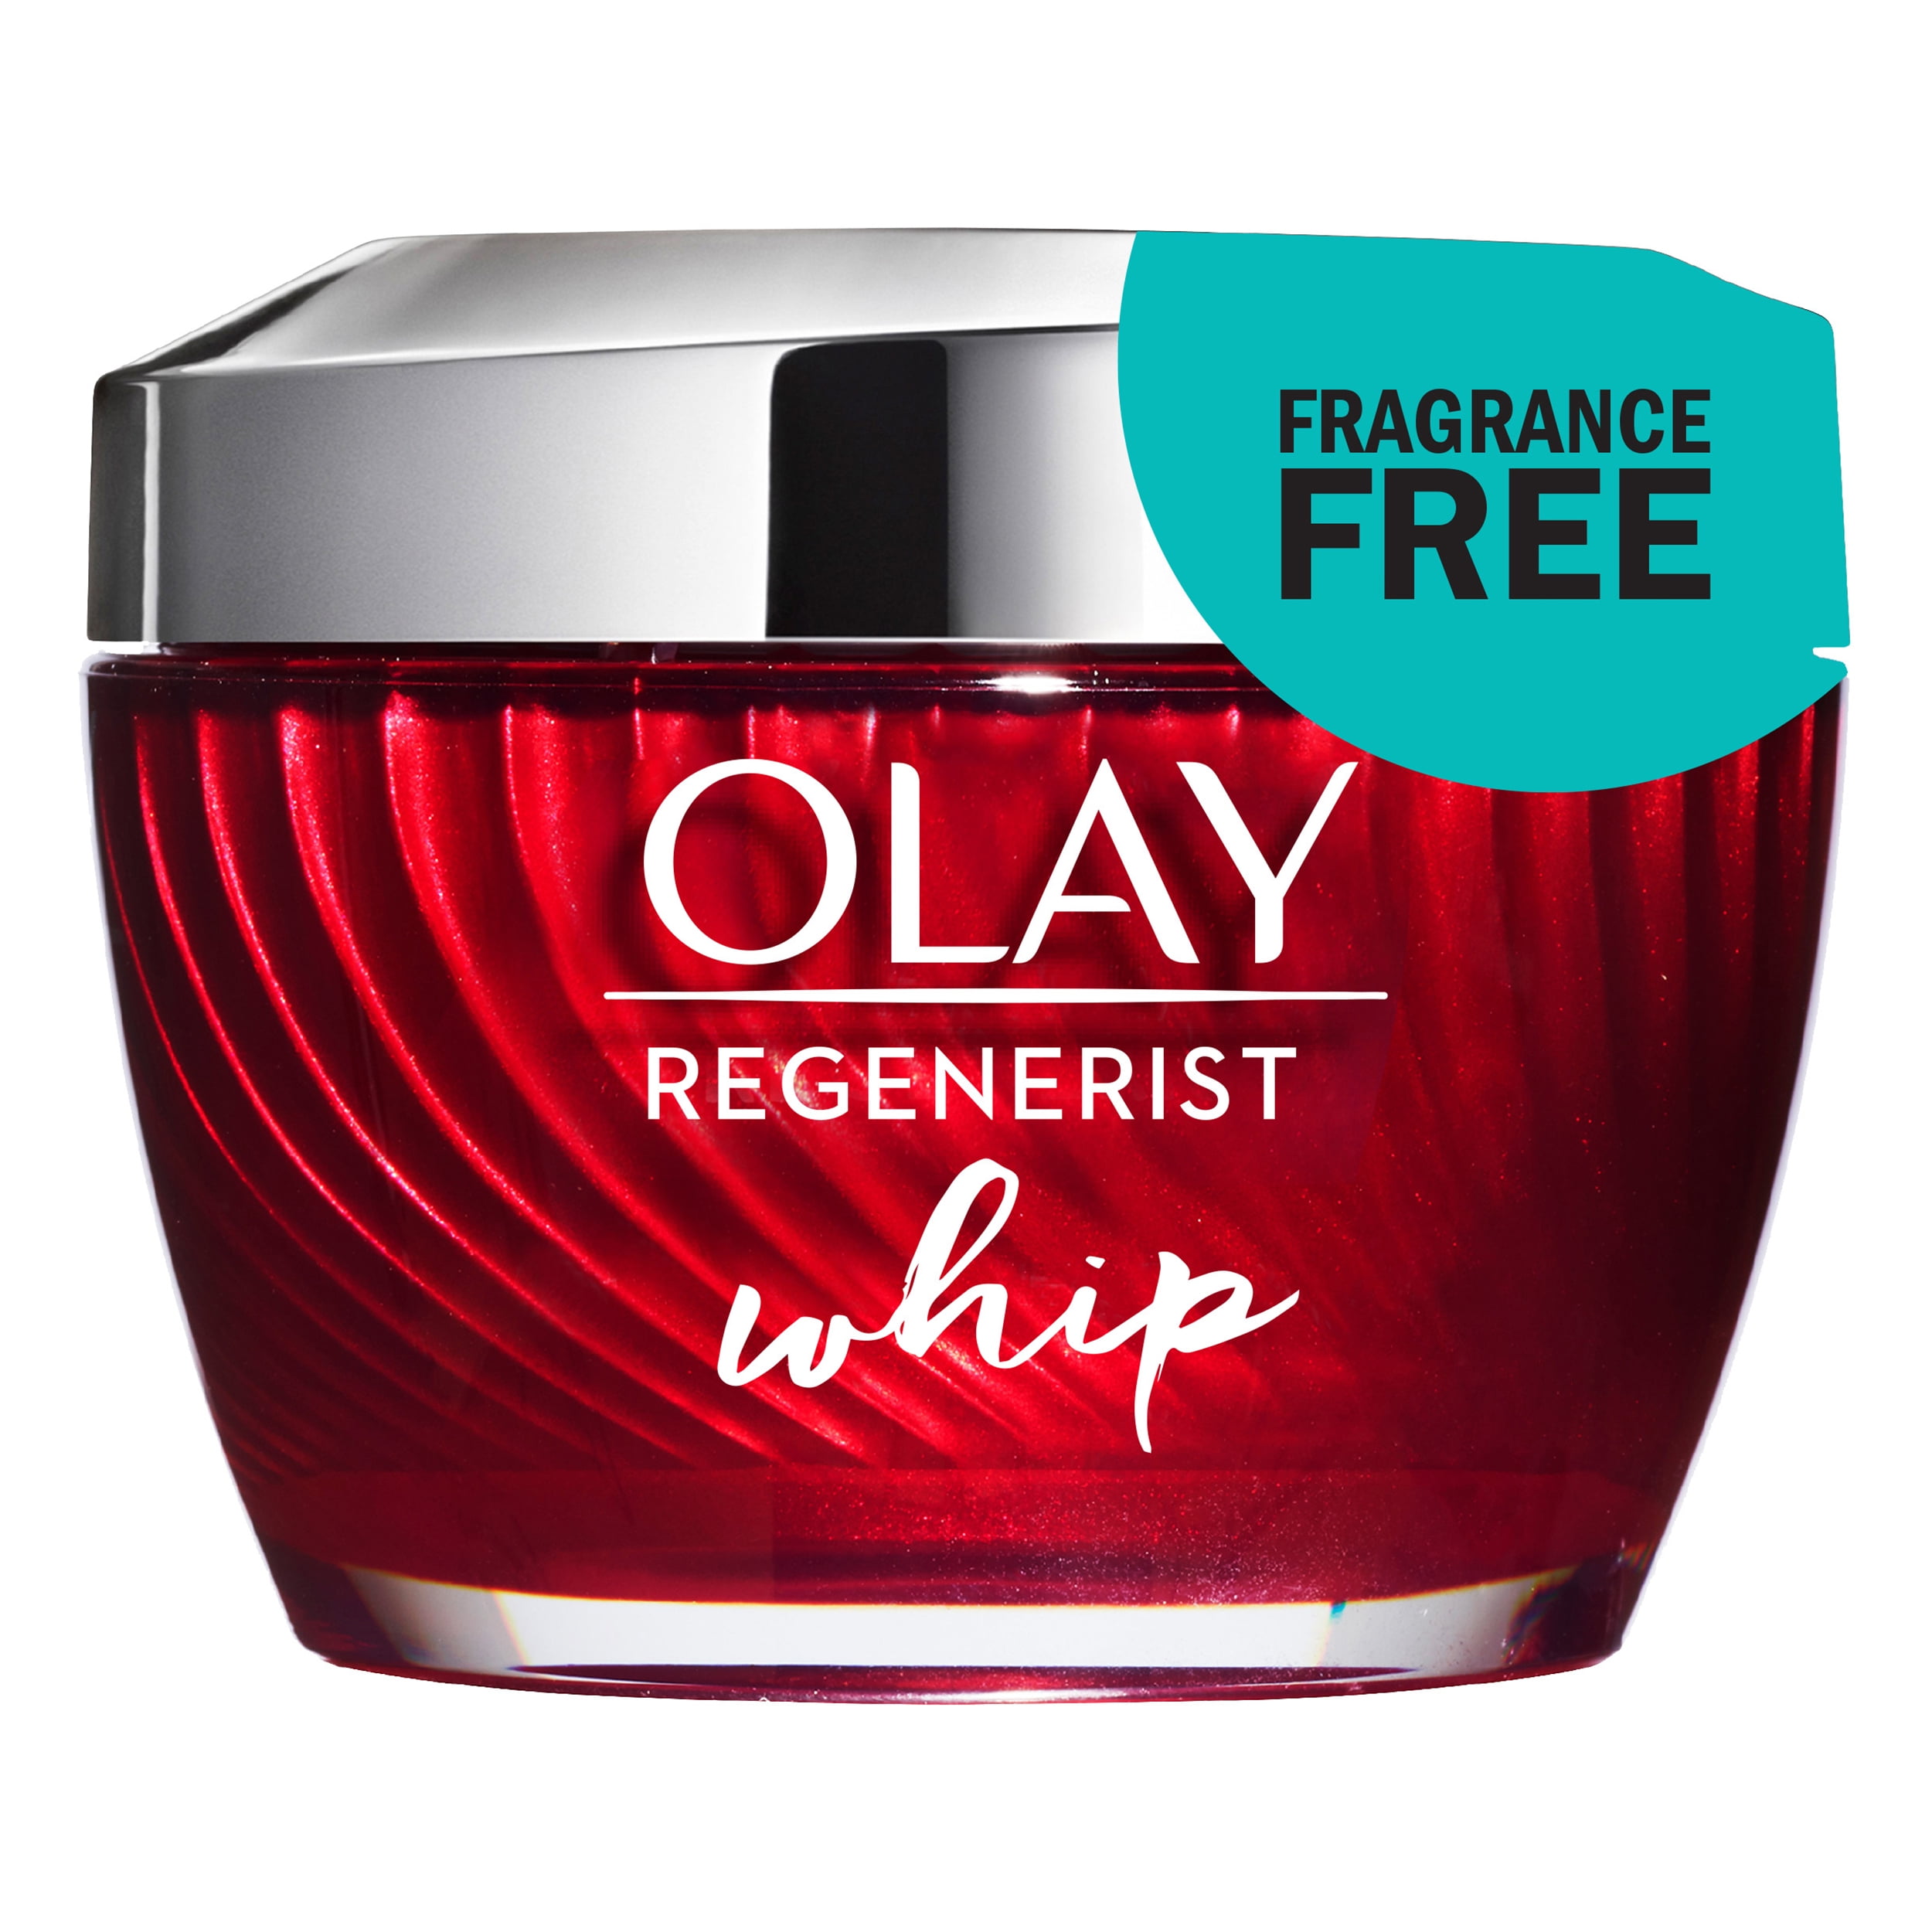 Olay Regenerist Whip Face Cream Moisturizer, FragranceFree, 1.7 oz